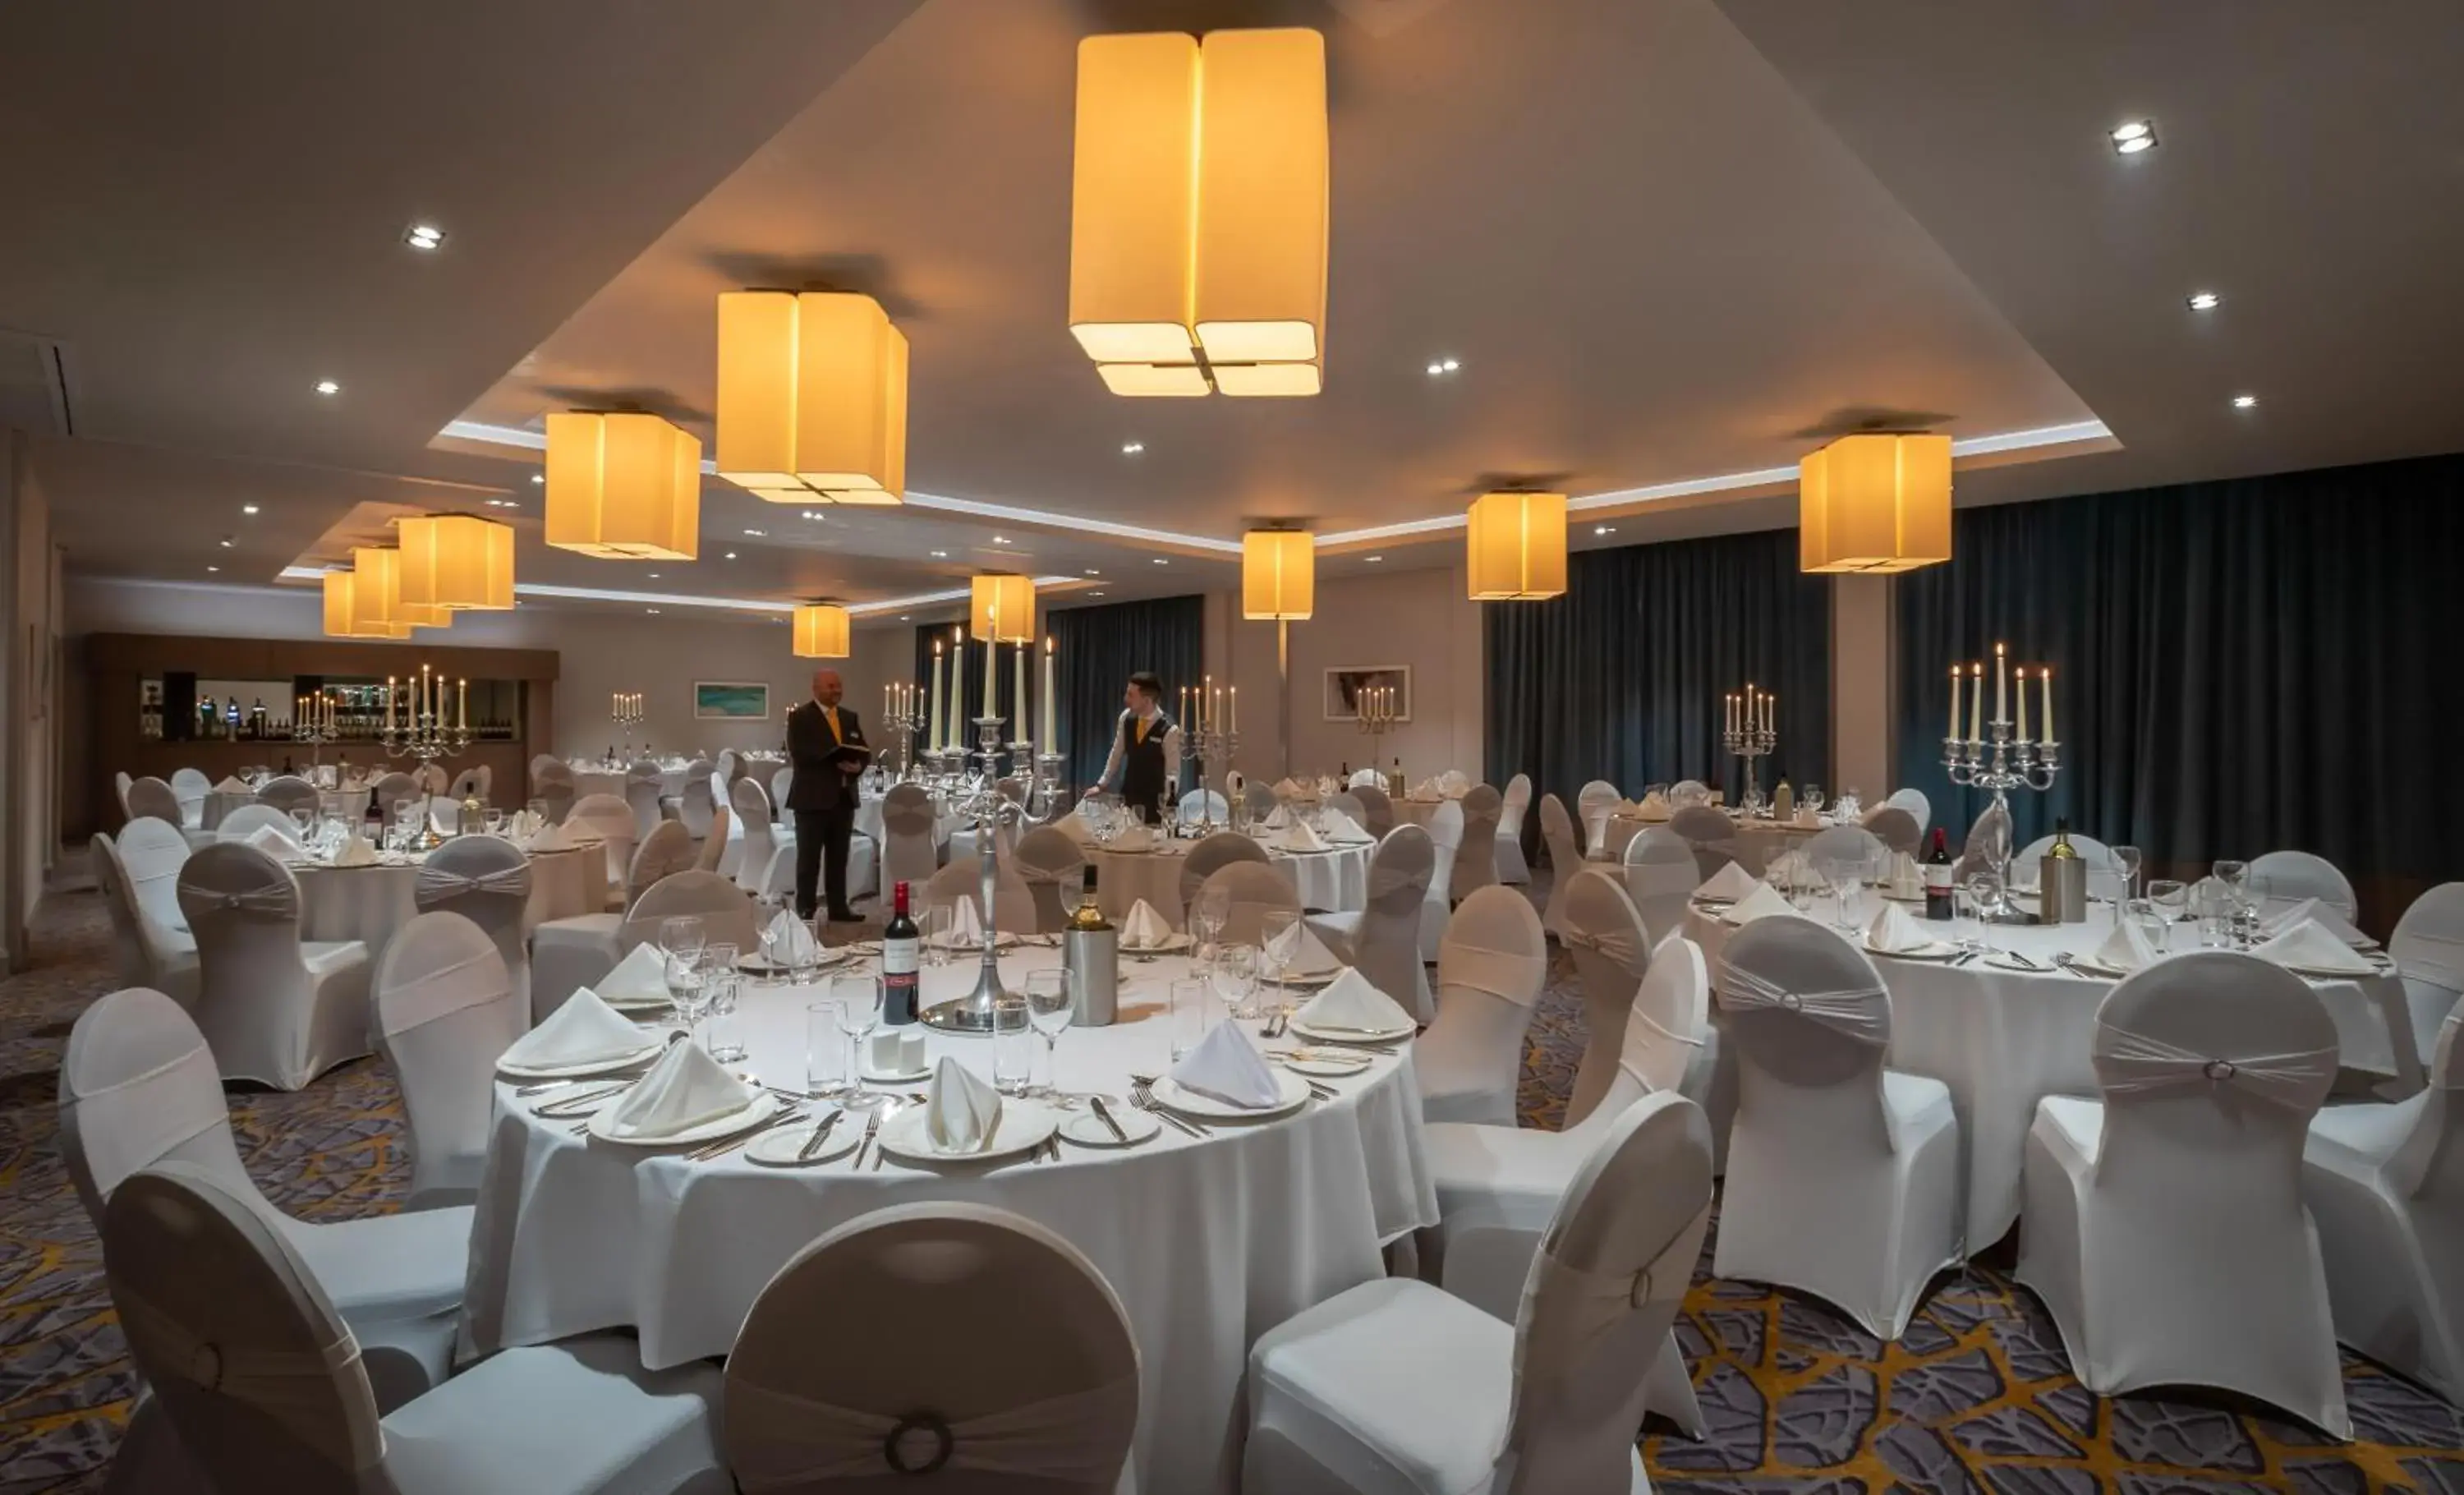 Banquet/Function facilities, Banquet Facilities in Maldron Hotel Belfast International Airport